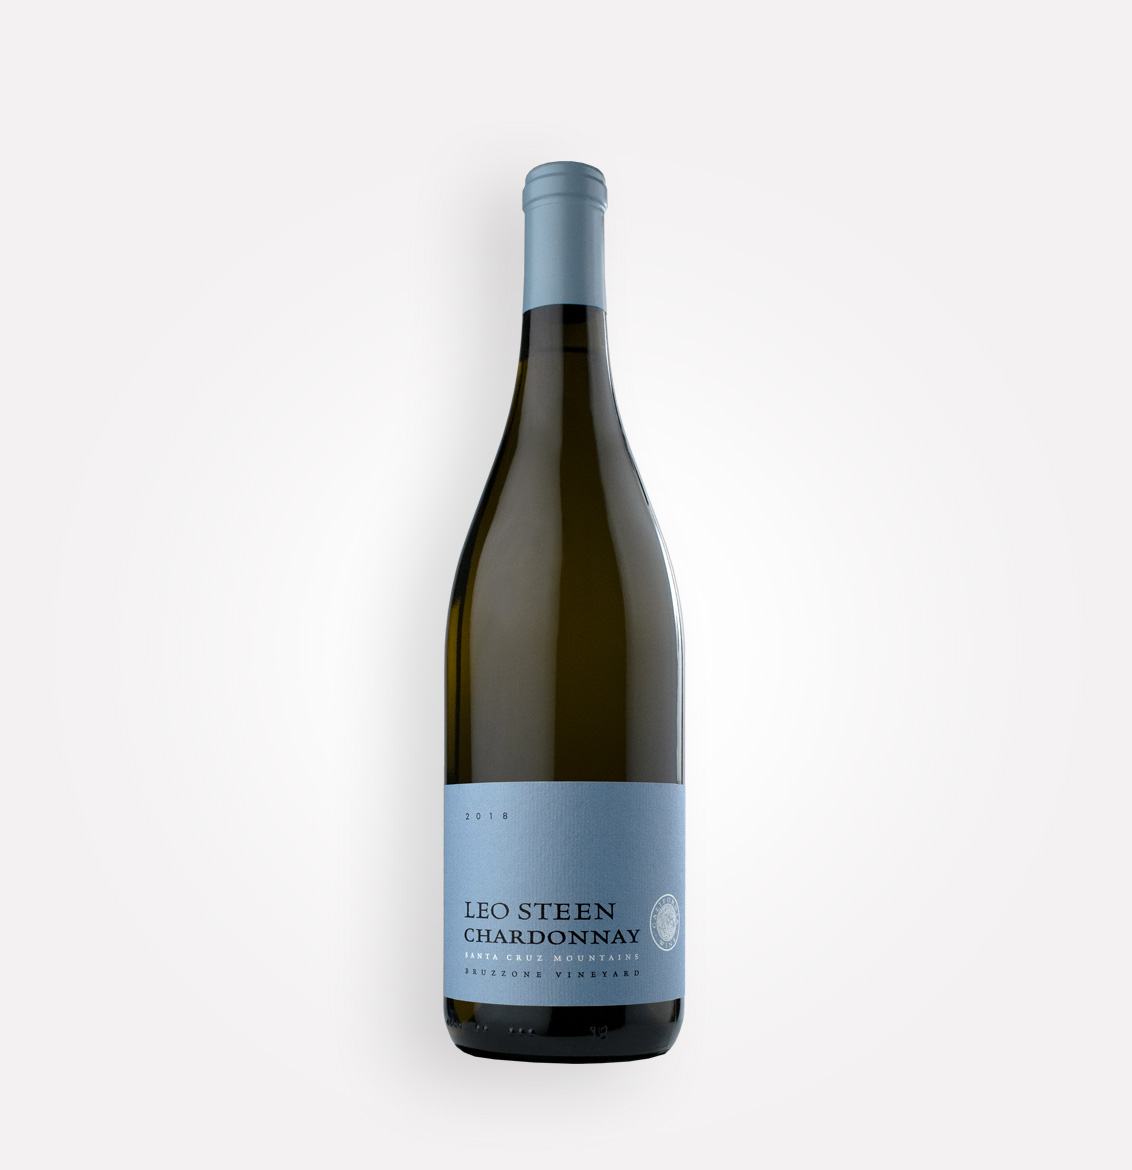 Bottle of Leo Steen 2018 Bruzzone Vineyard Chardonnay from California's Santa Cruz Mountains